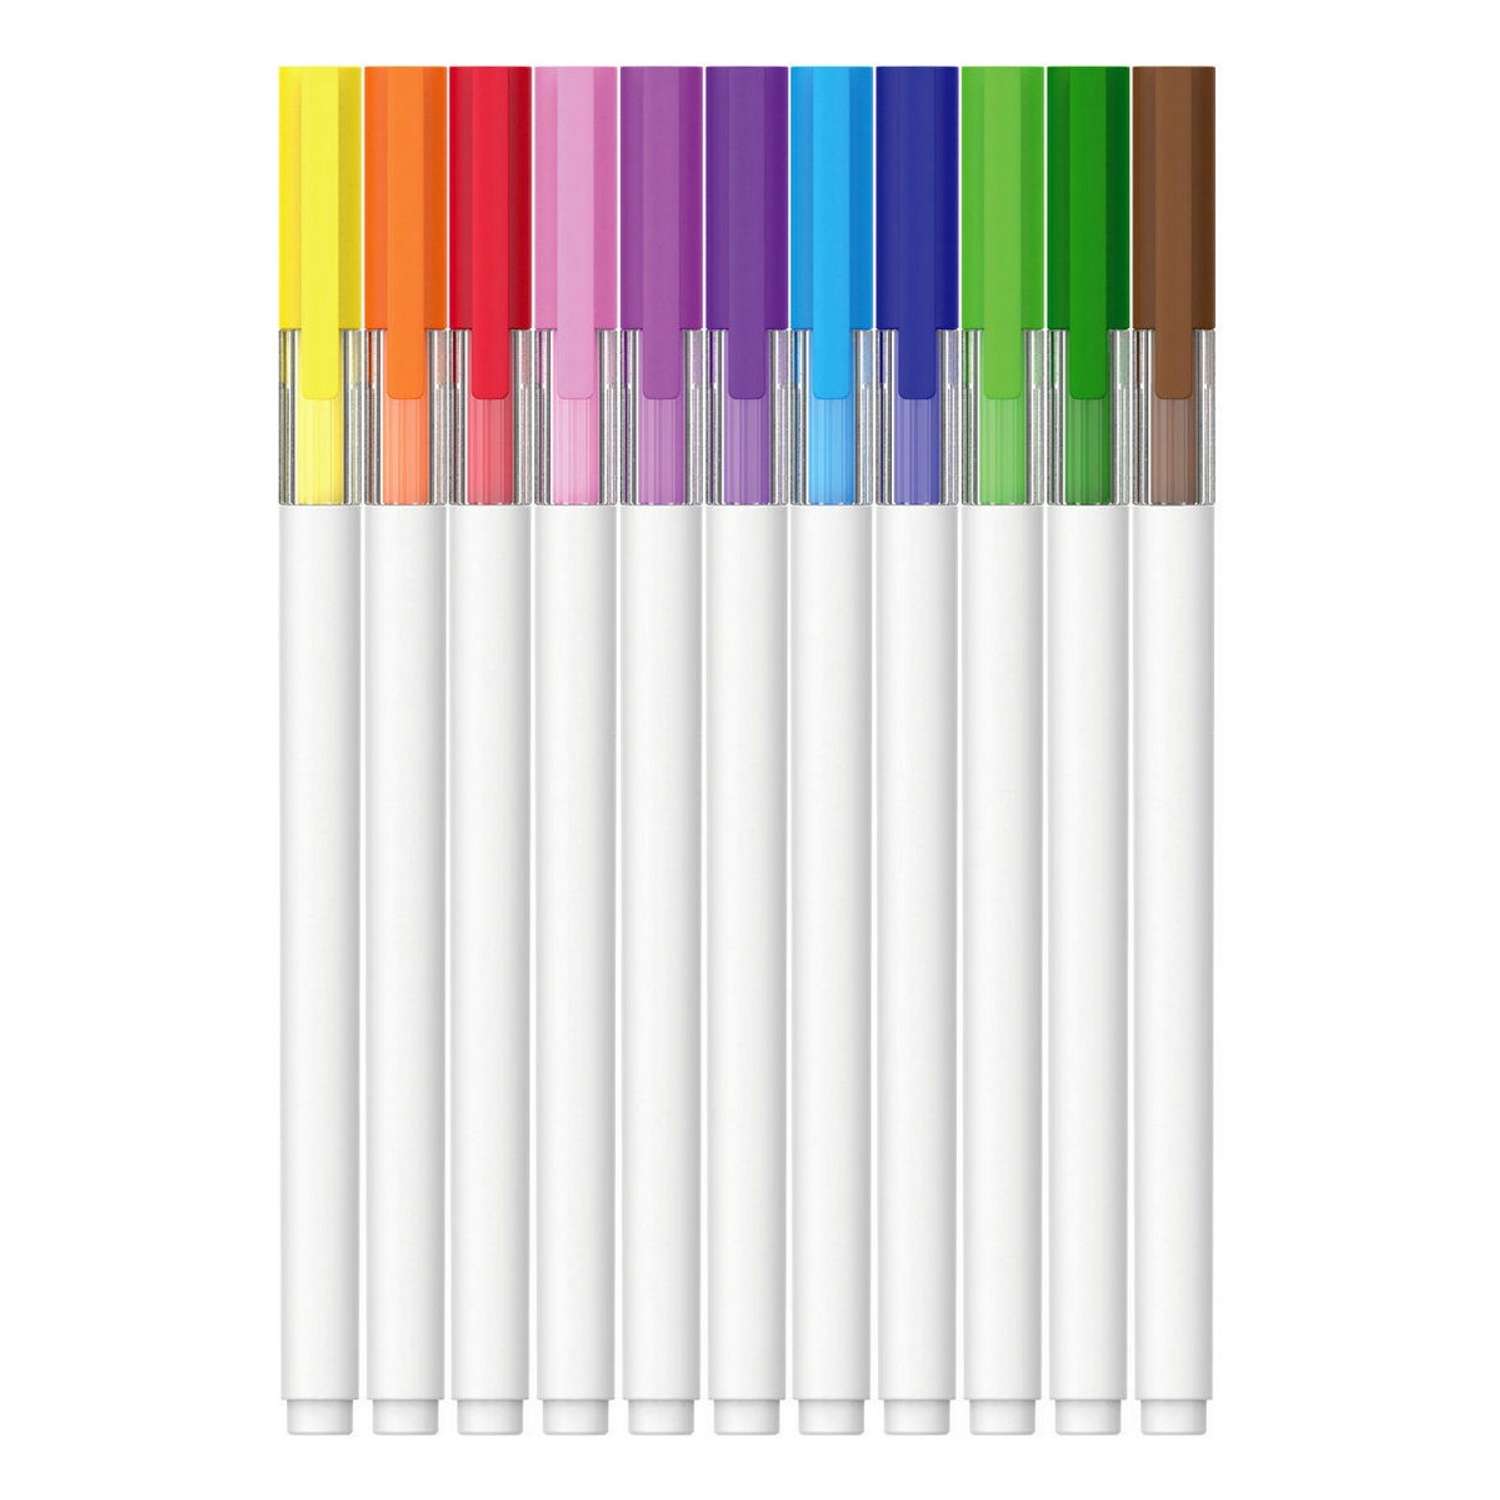 Ручки капиллярные KEYROAD набор Fineliner 0.4 мм 12 цветов пластик футляр - фото 3